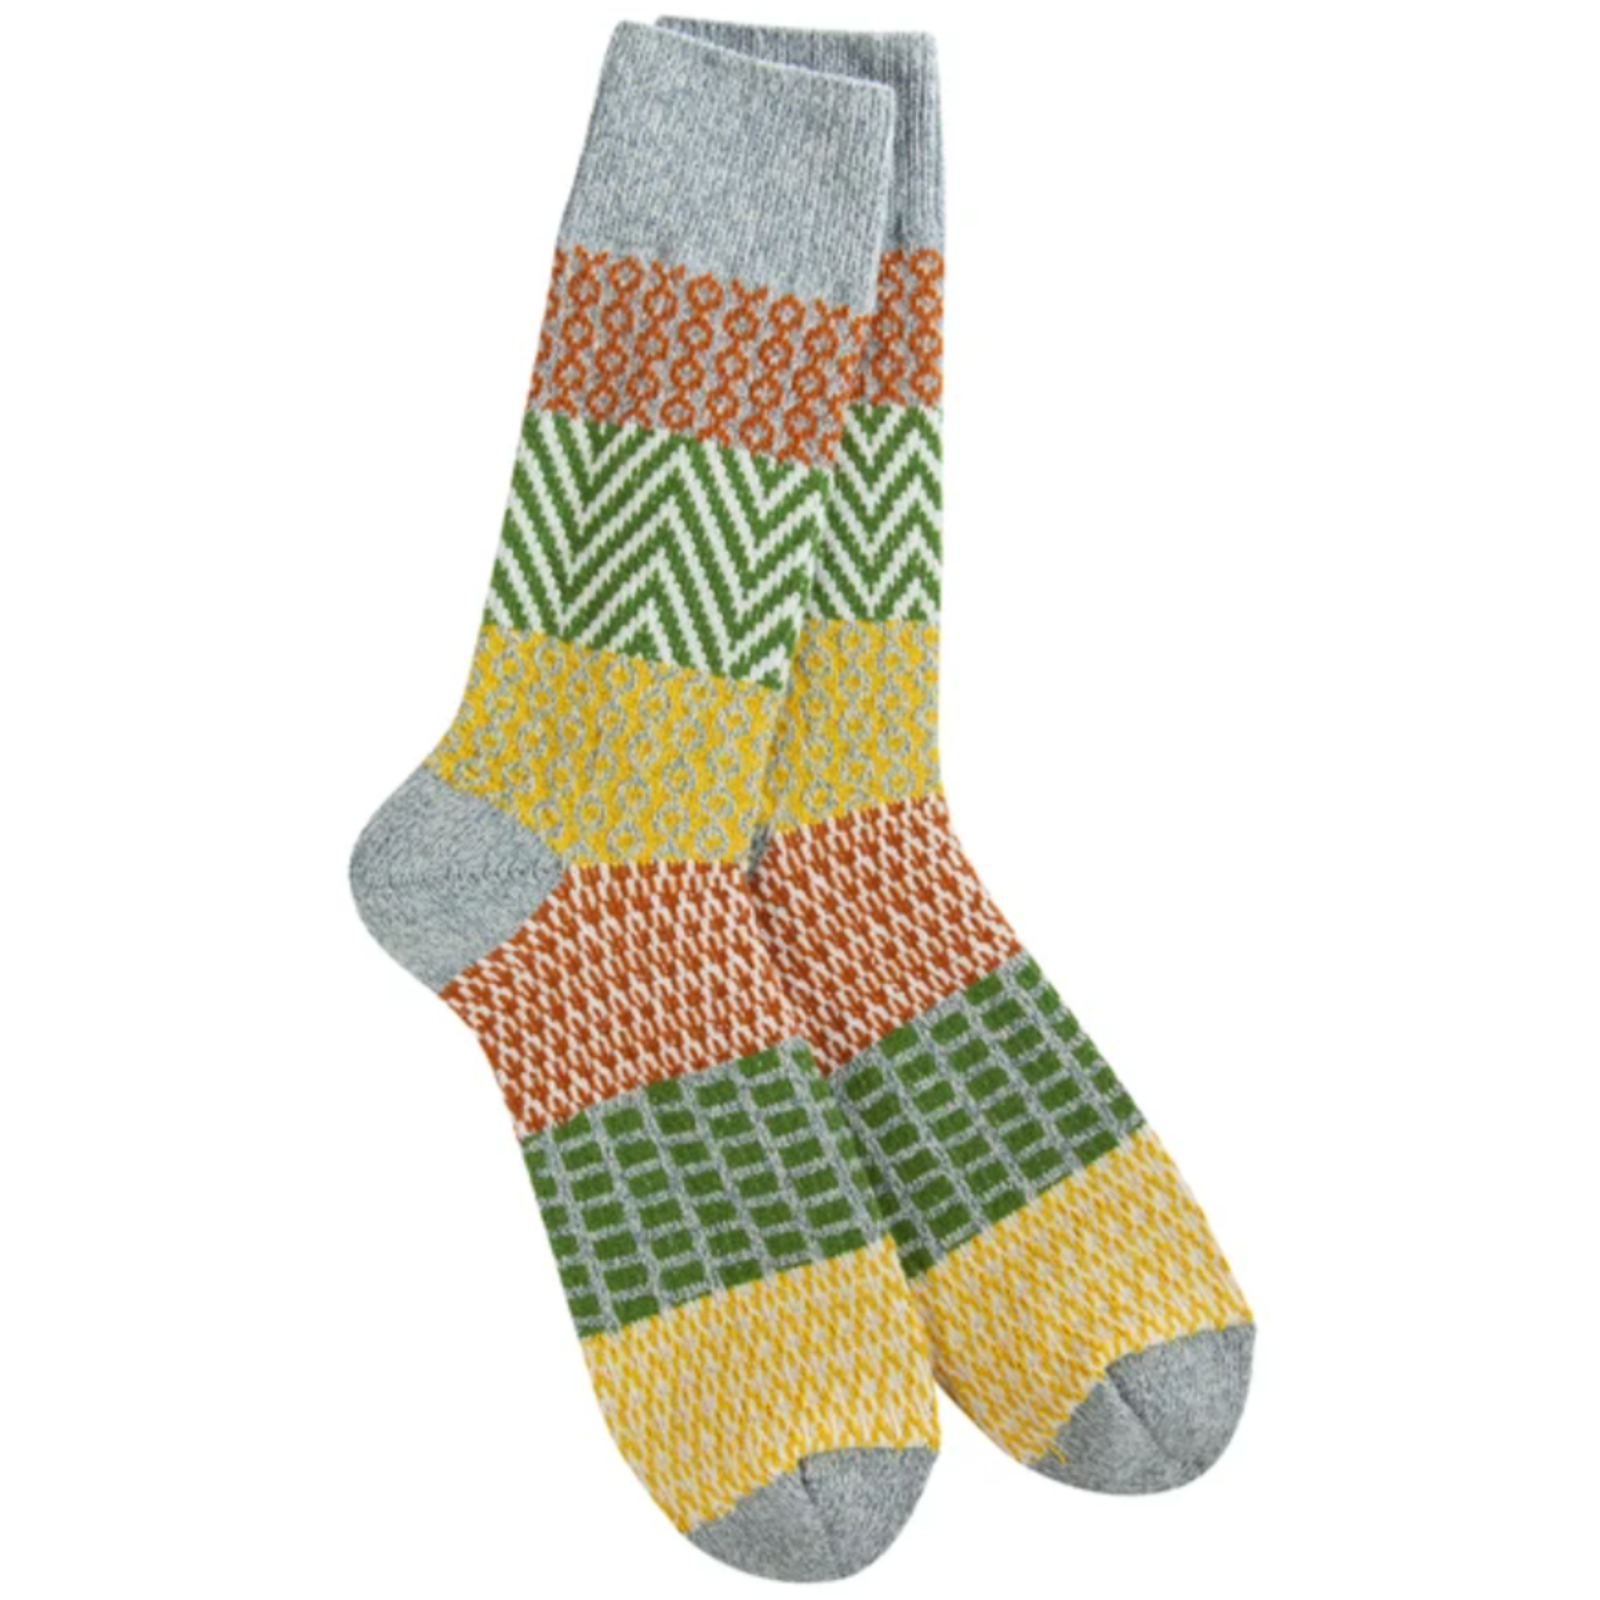 World's Softest GALLERY CREW Sock WS66614 loading=